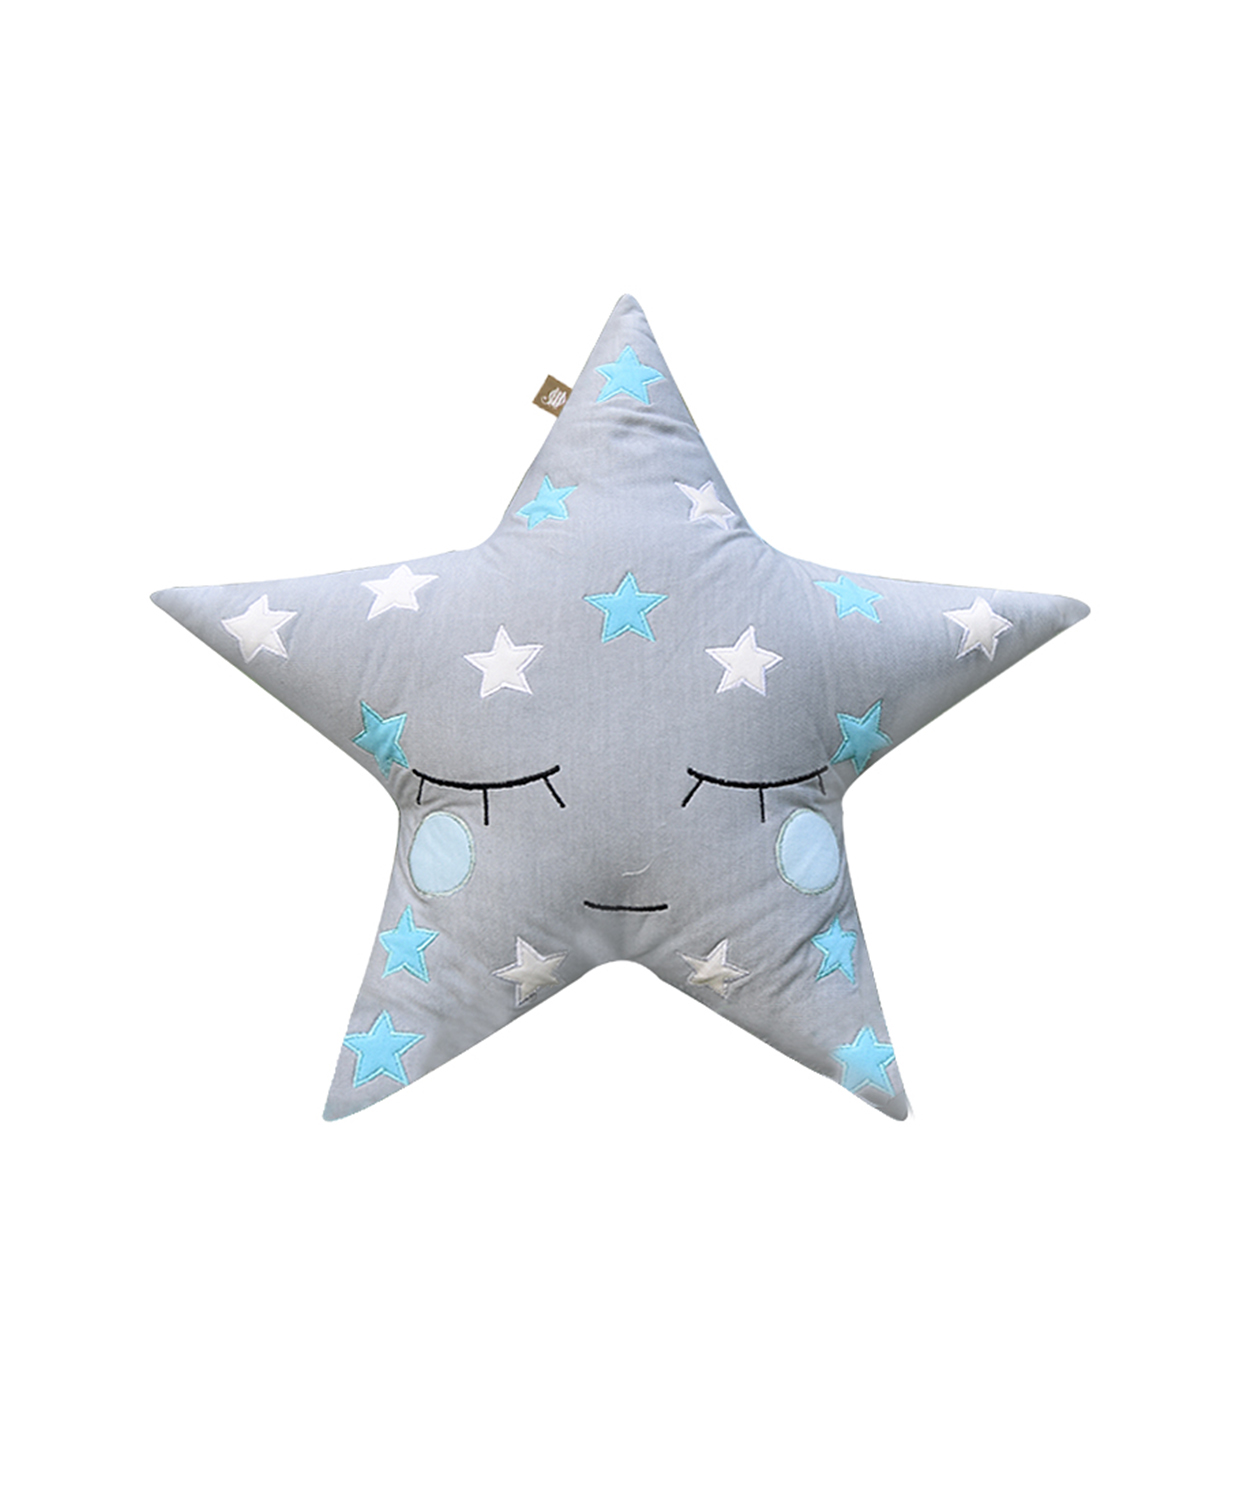 The Gazing Star Cushion